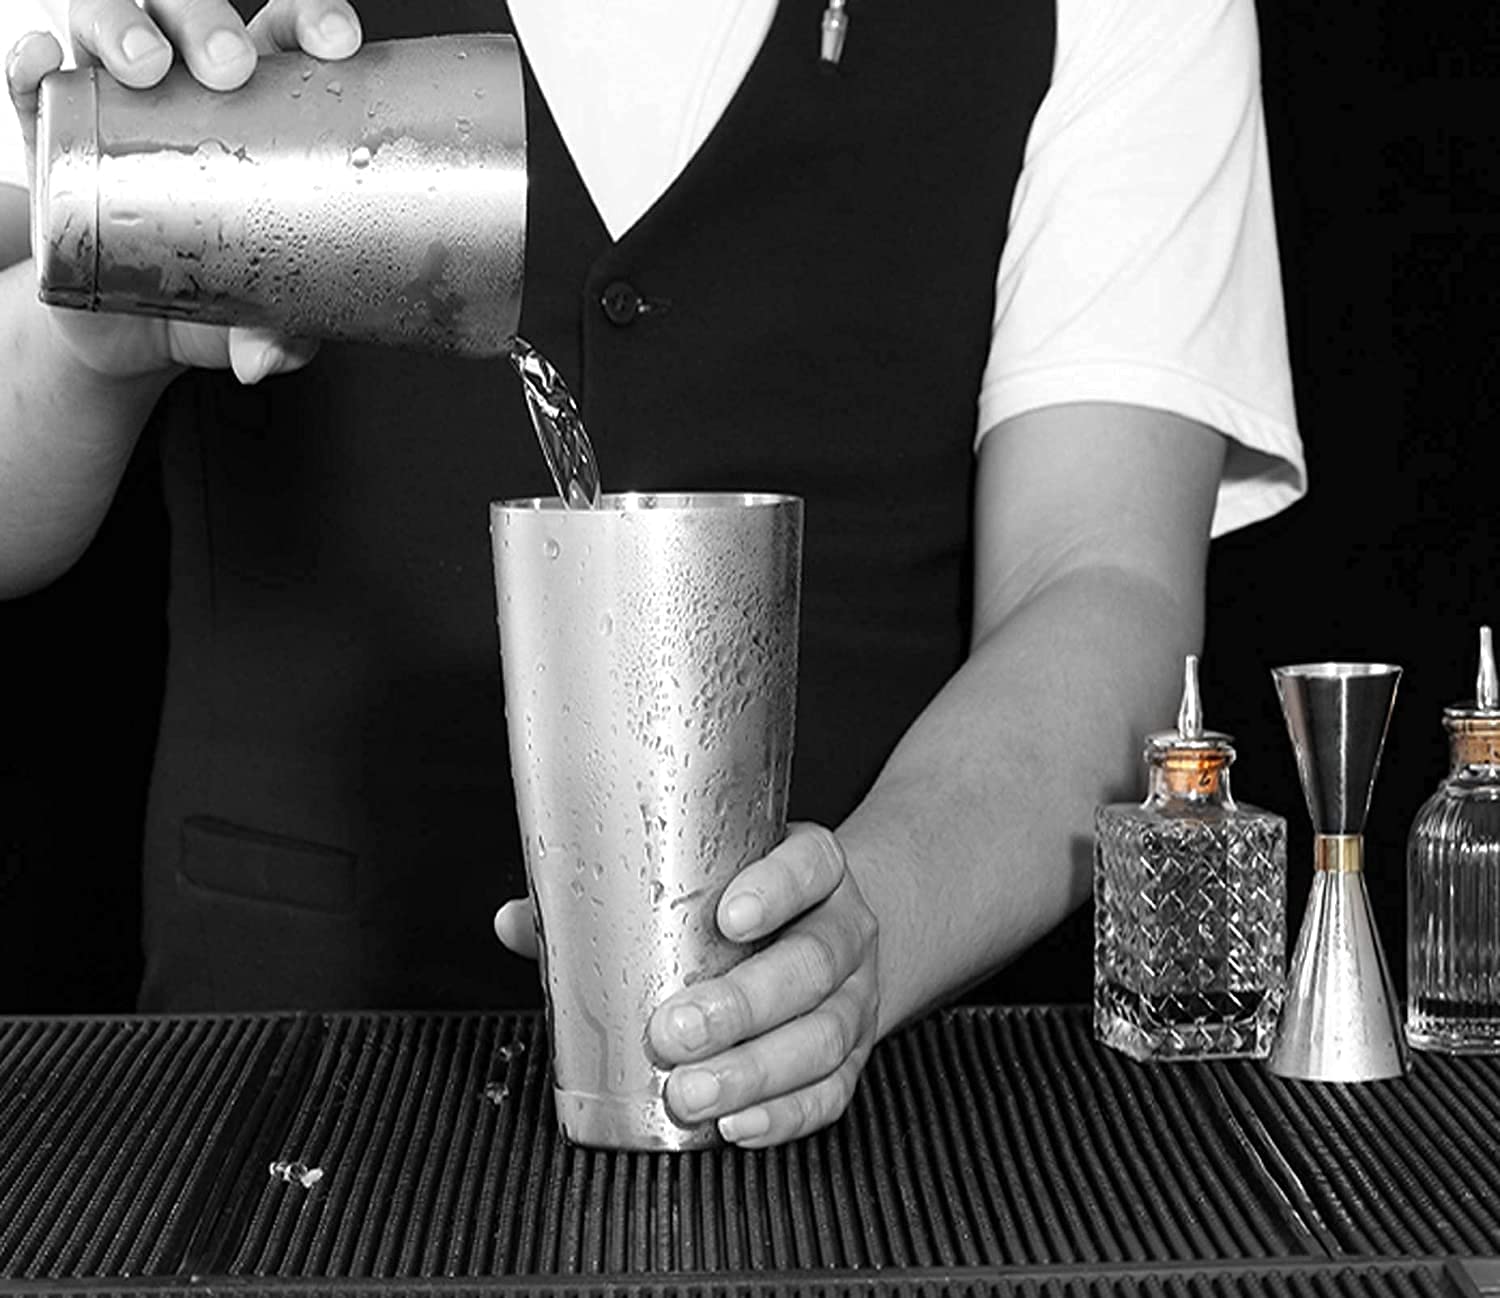 NJ Boston Cocktail Shaker, Cocktail Shaker Boston Mixing Tin Bartender Tool , Stainless Steel Shaker Bar Set for Parties, Boston Shaking Shaker Sets 540 ml and 900 ml : 16 Pcs Set